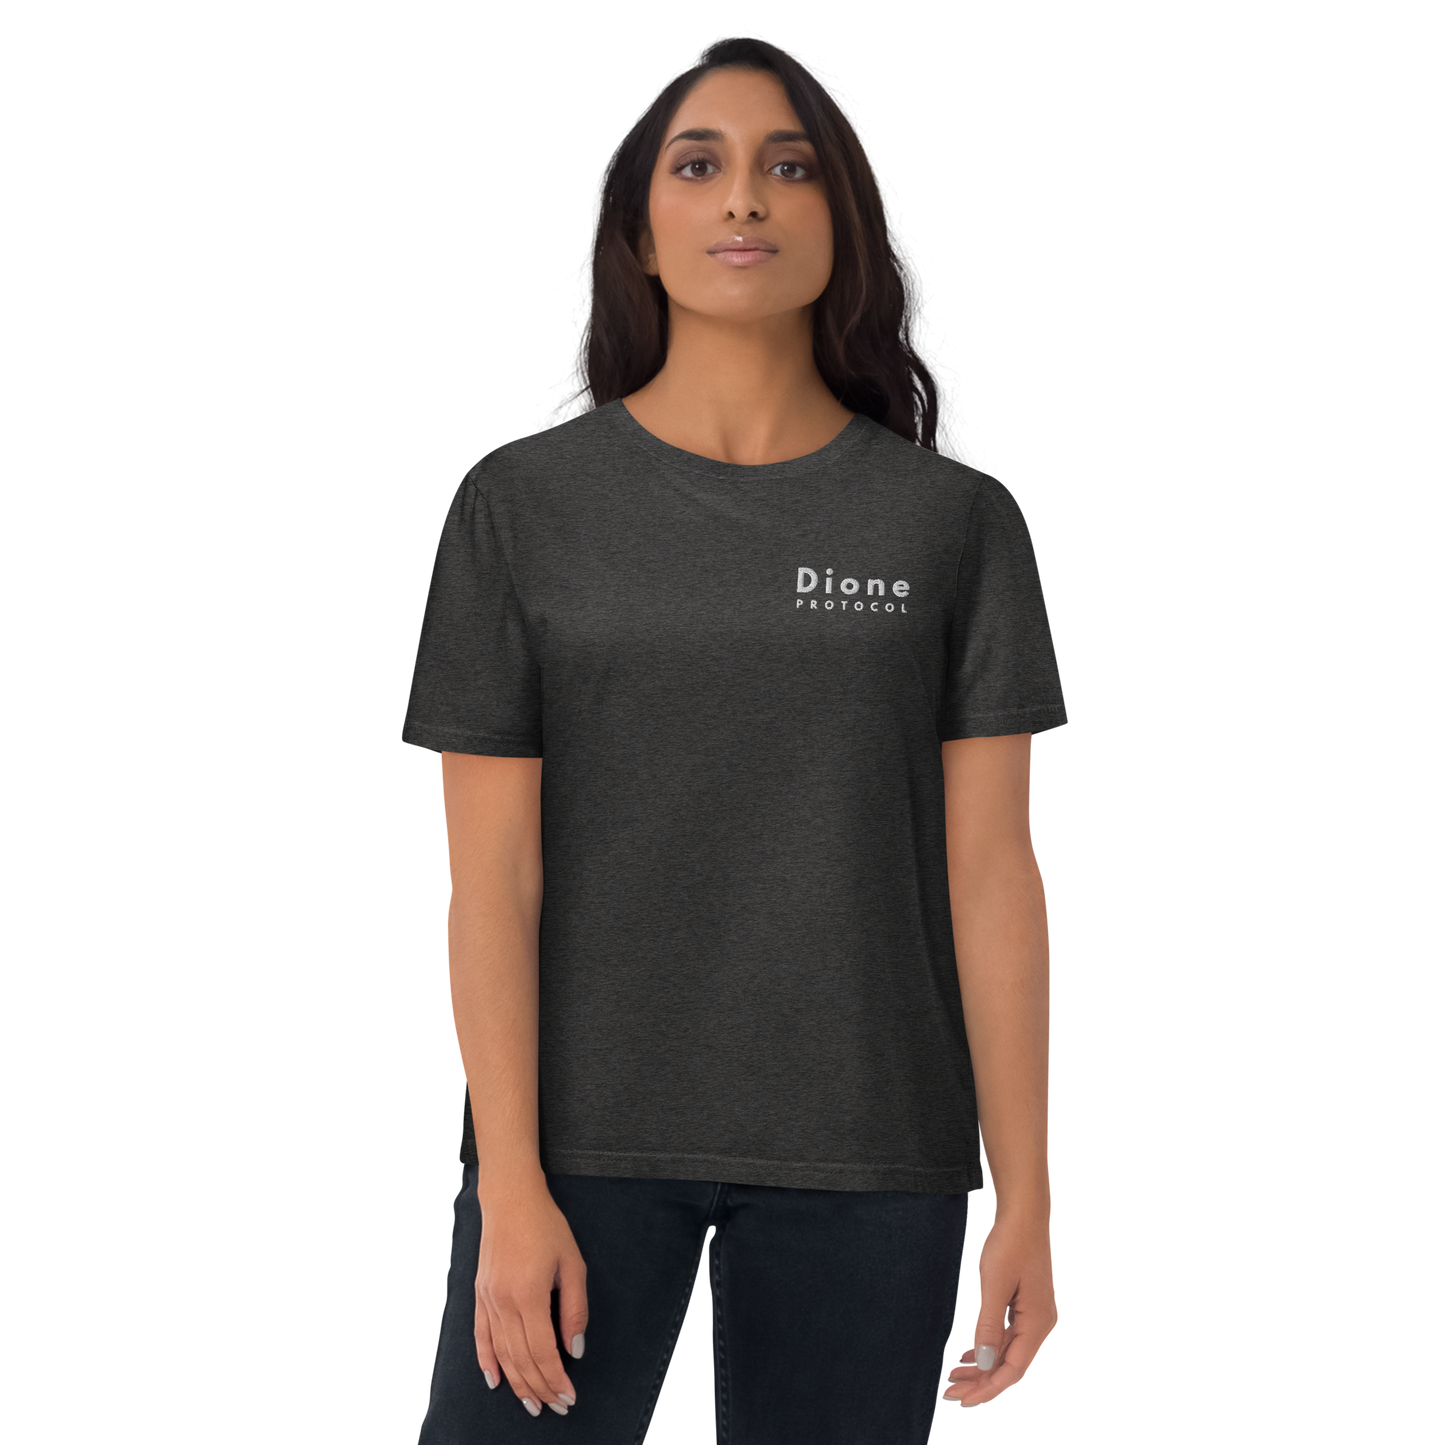 T-Shirt - Discret V1.0 - Noir, Marine, Gris - Premium